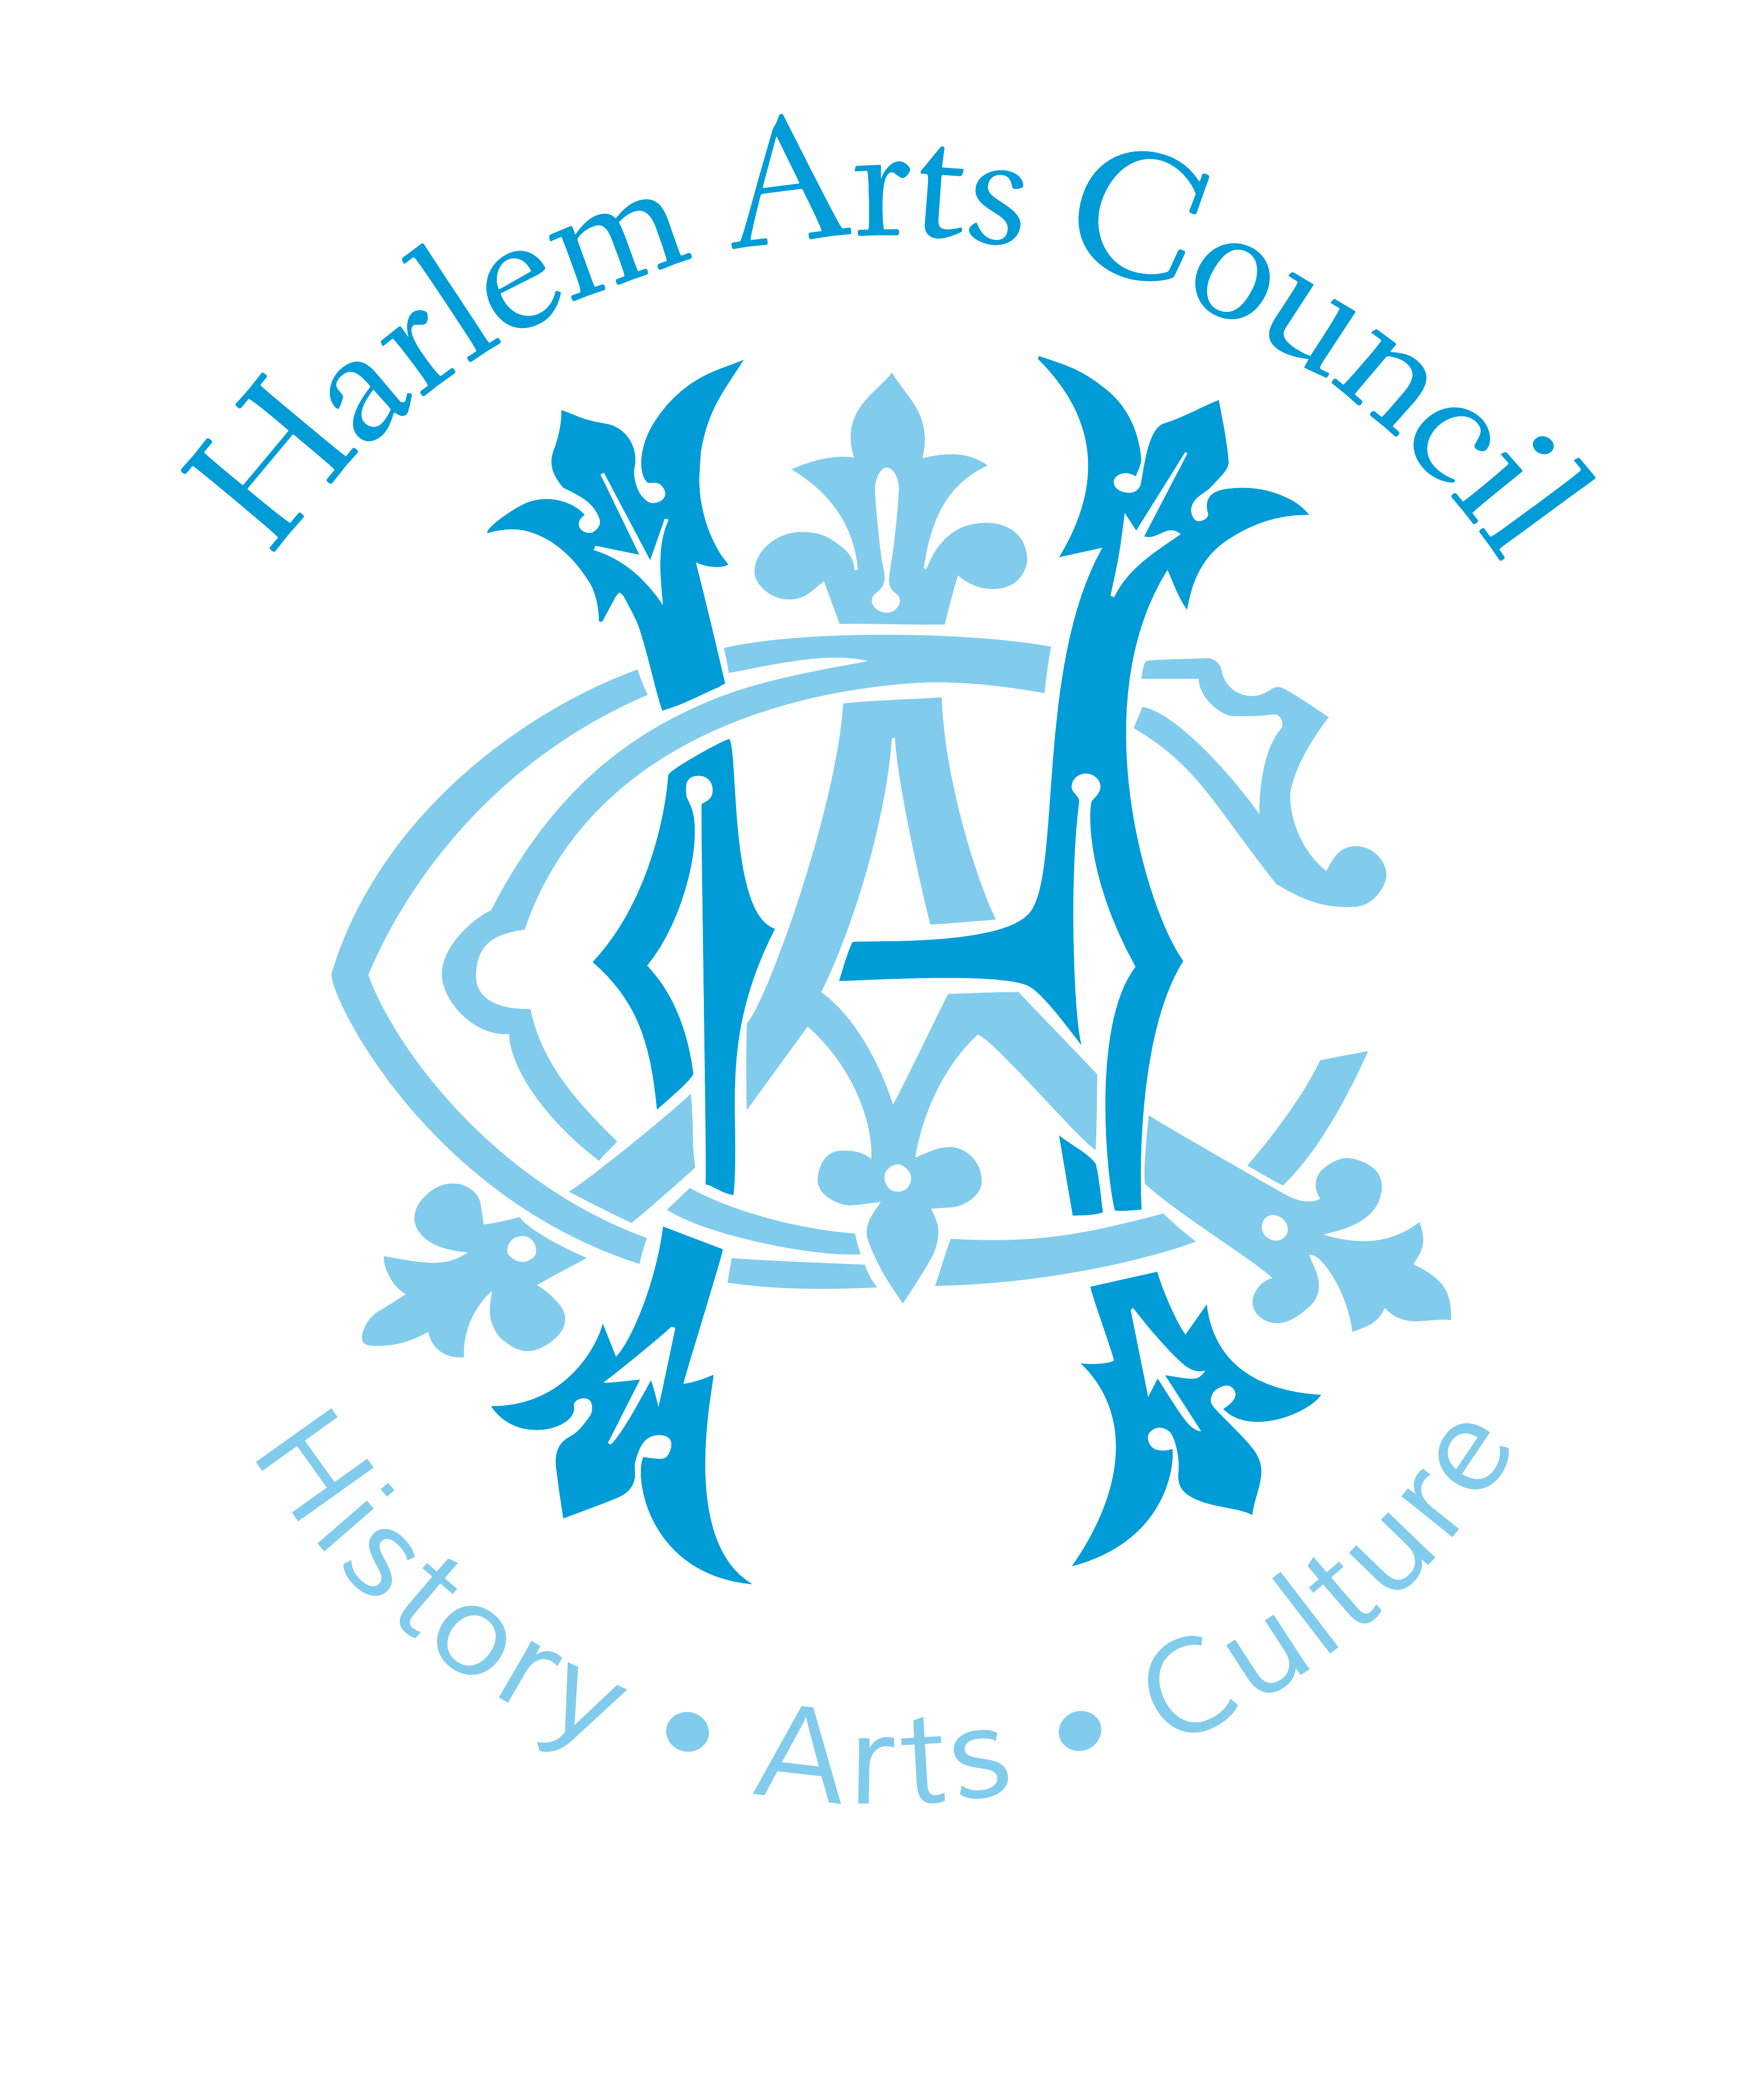 Harlem Arts Council logo